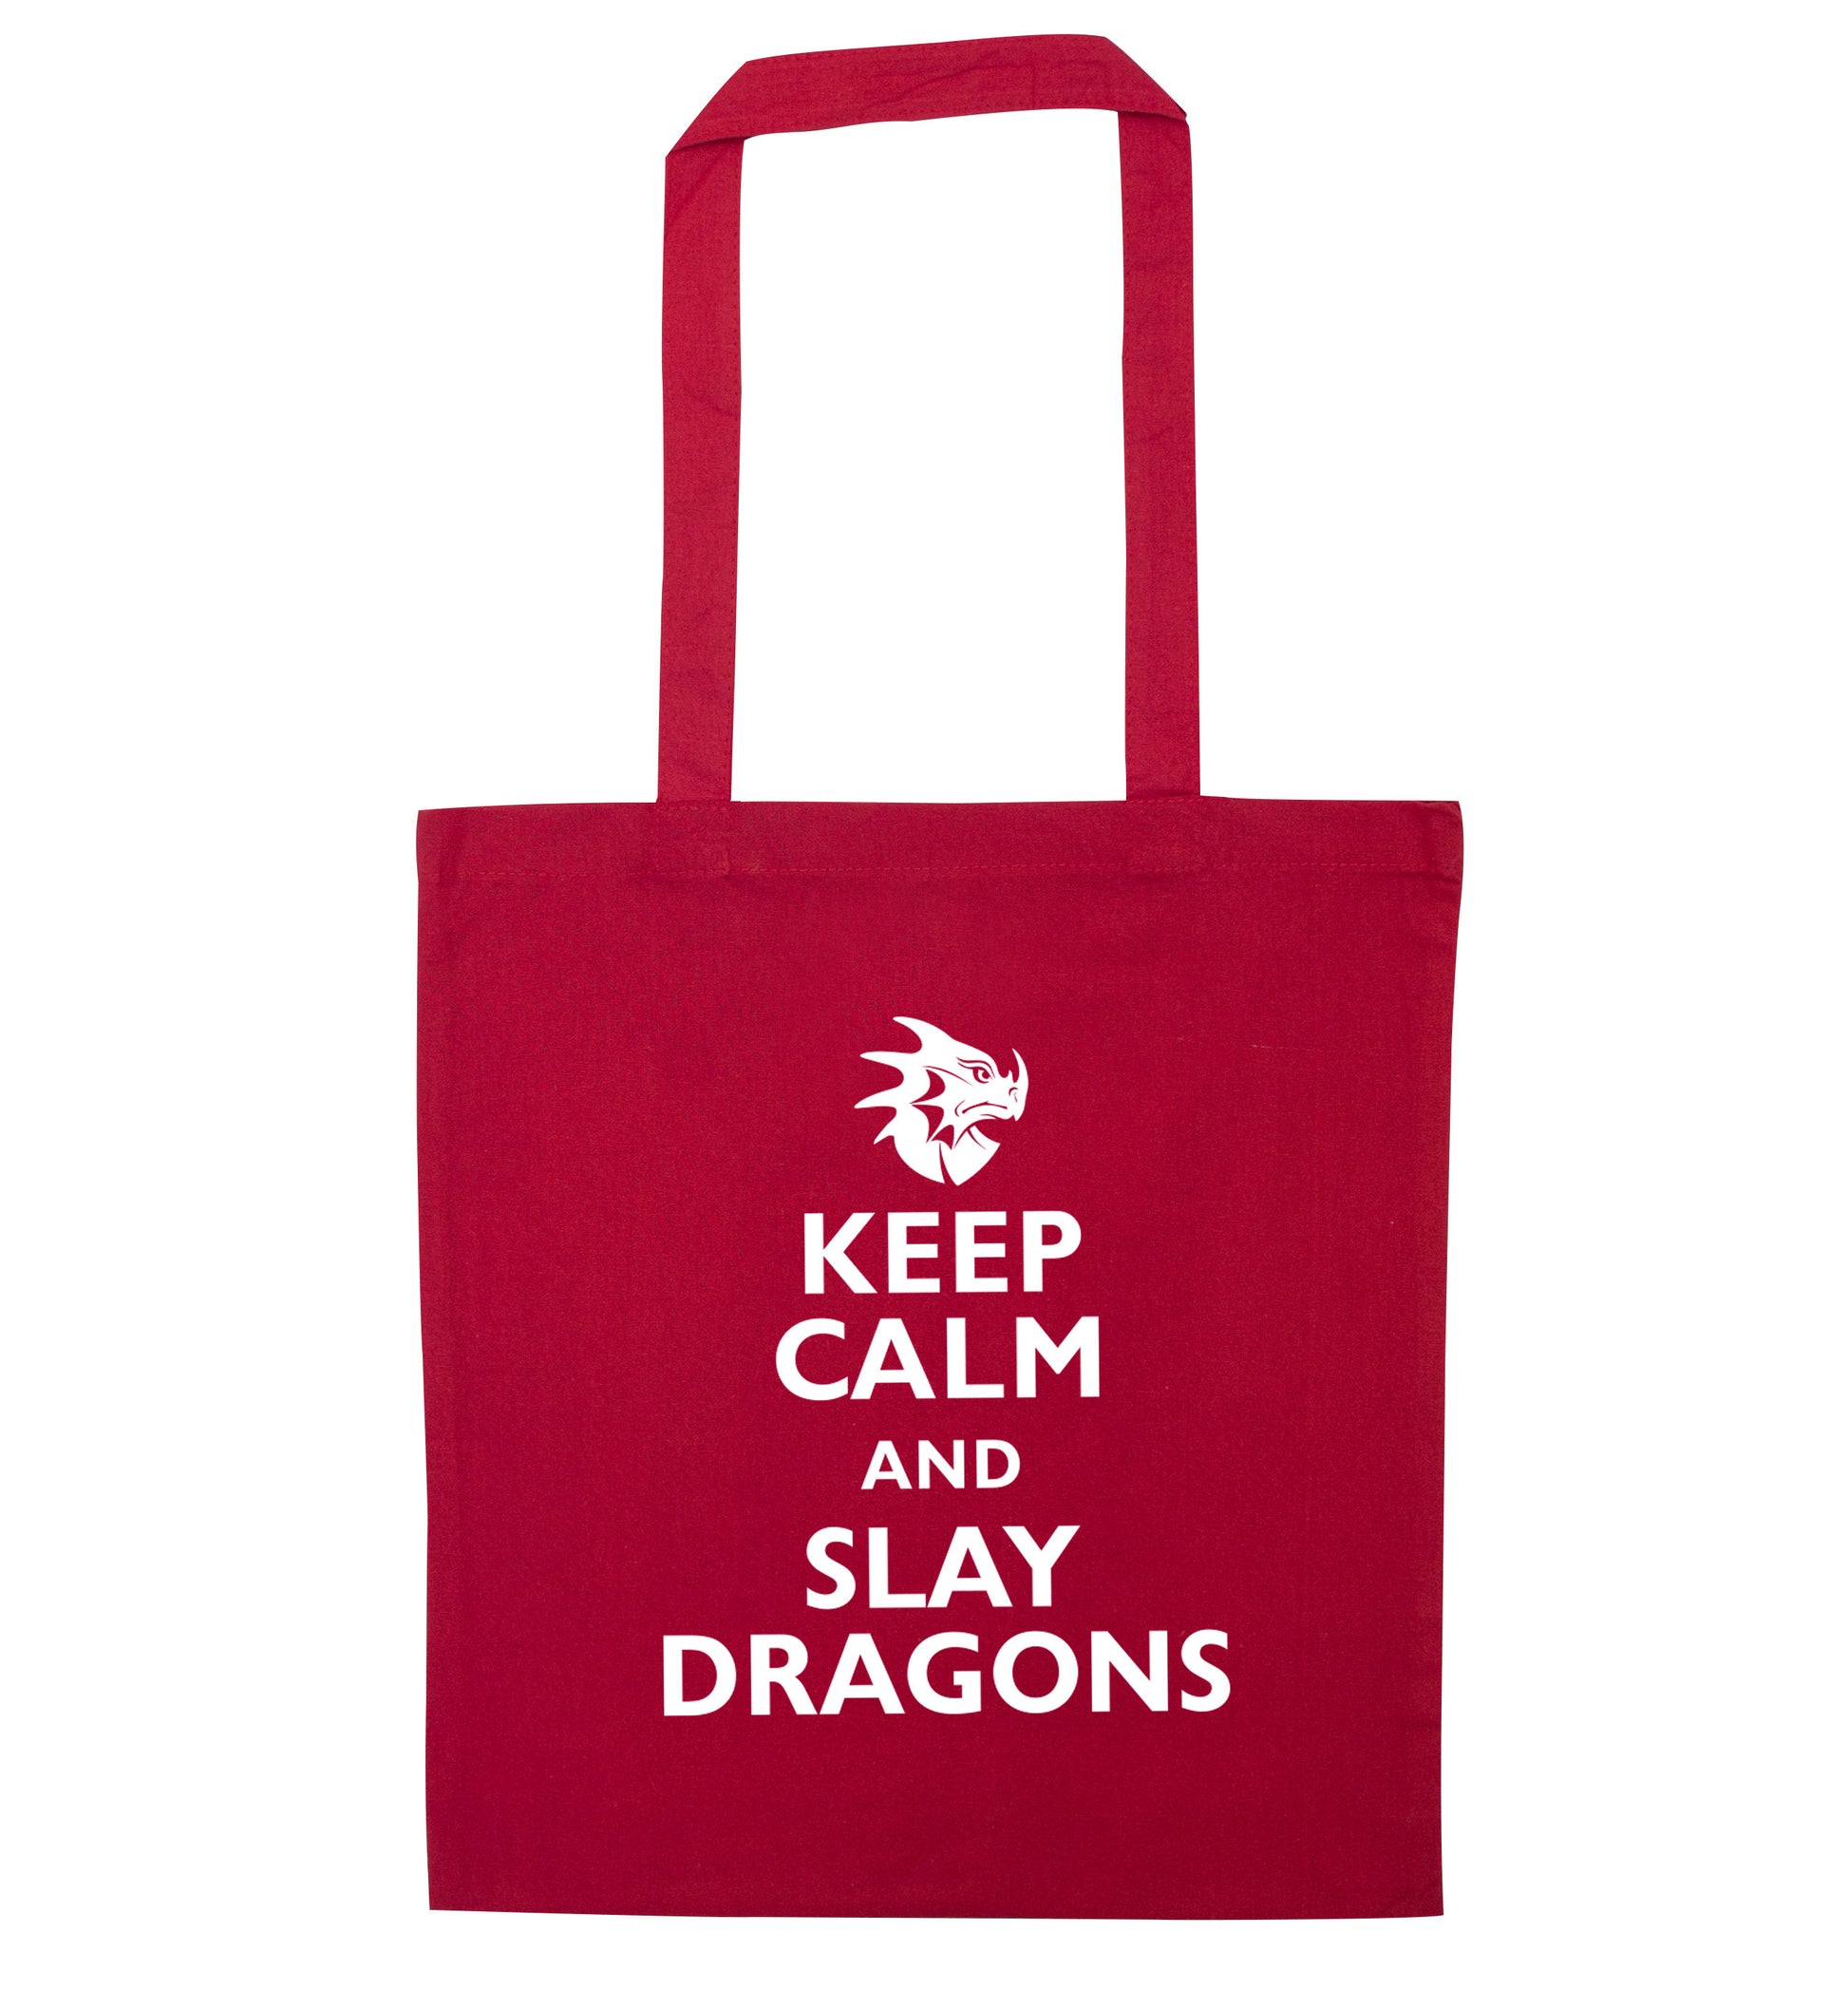 Keep calm and slay dragons red tote bag